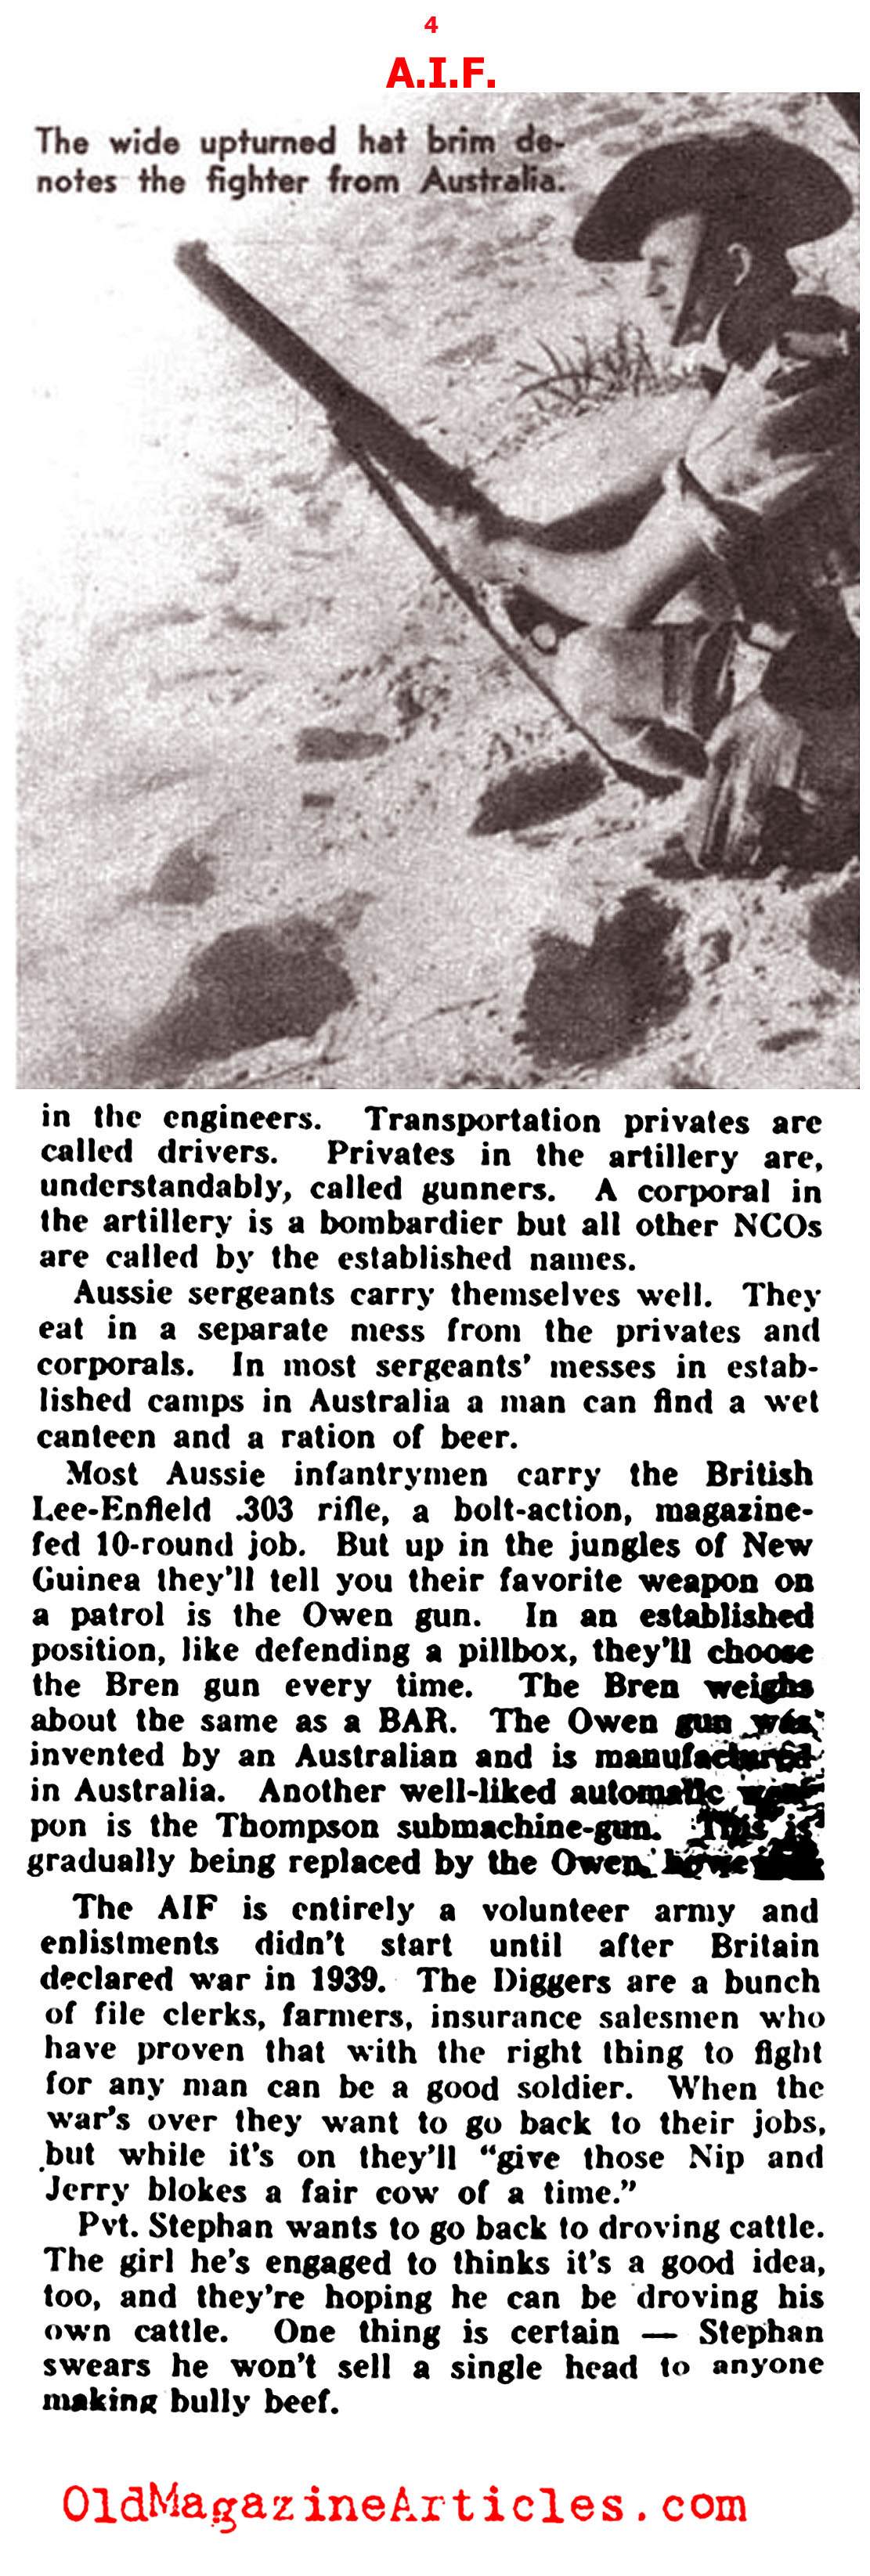 The Australian Soldier (Yank Magazine, 1944)